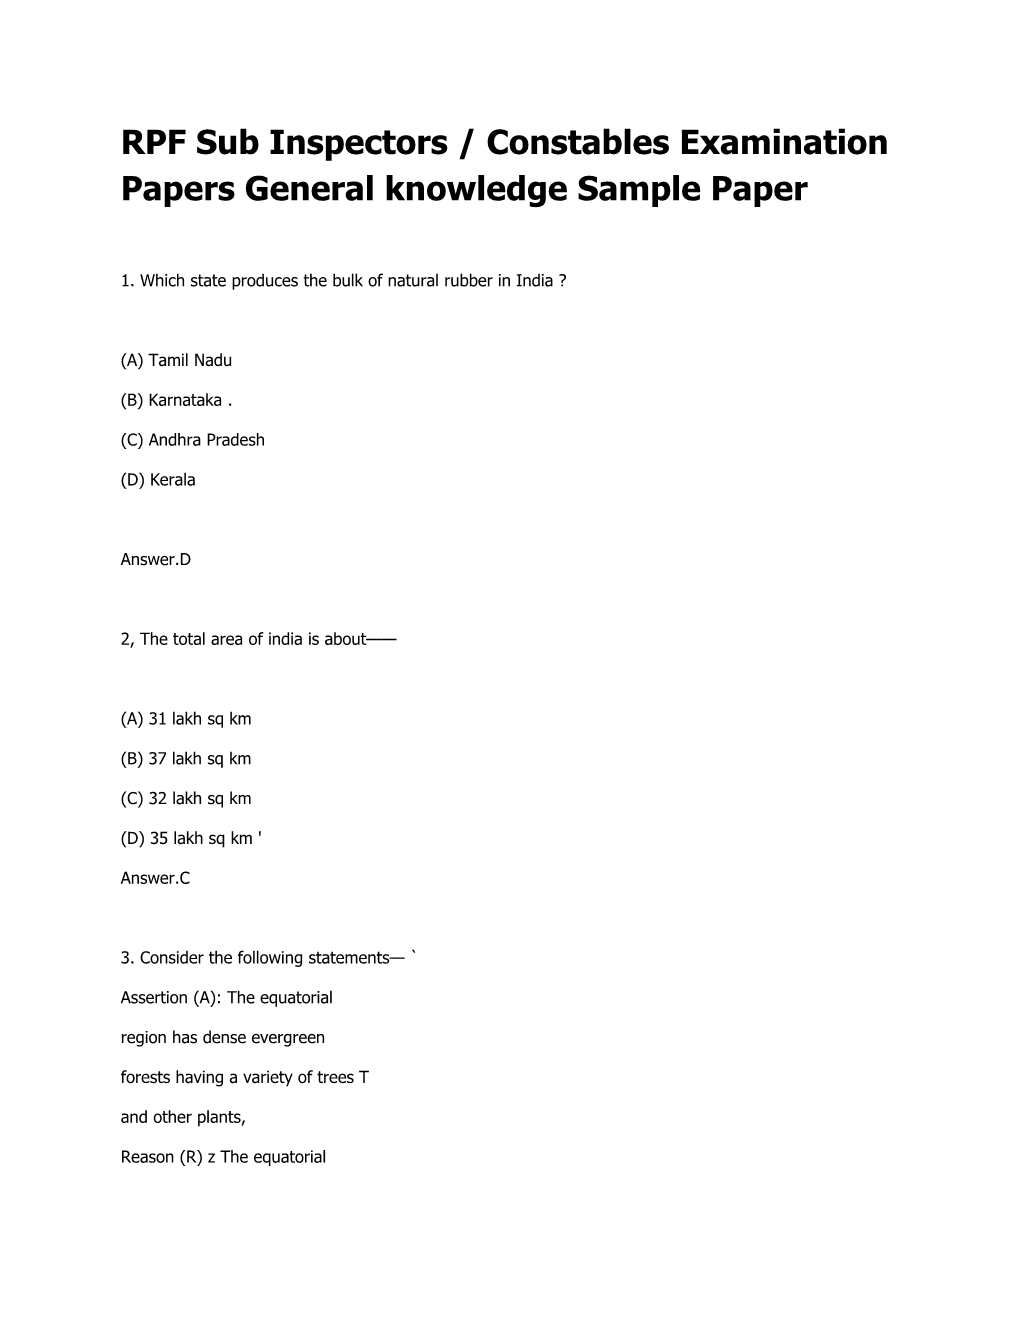 RPF Sub Inspectors / Constables Examination Papersgeneral Knowledge Sample Paper